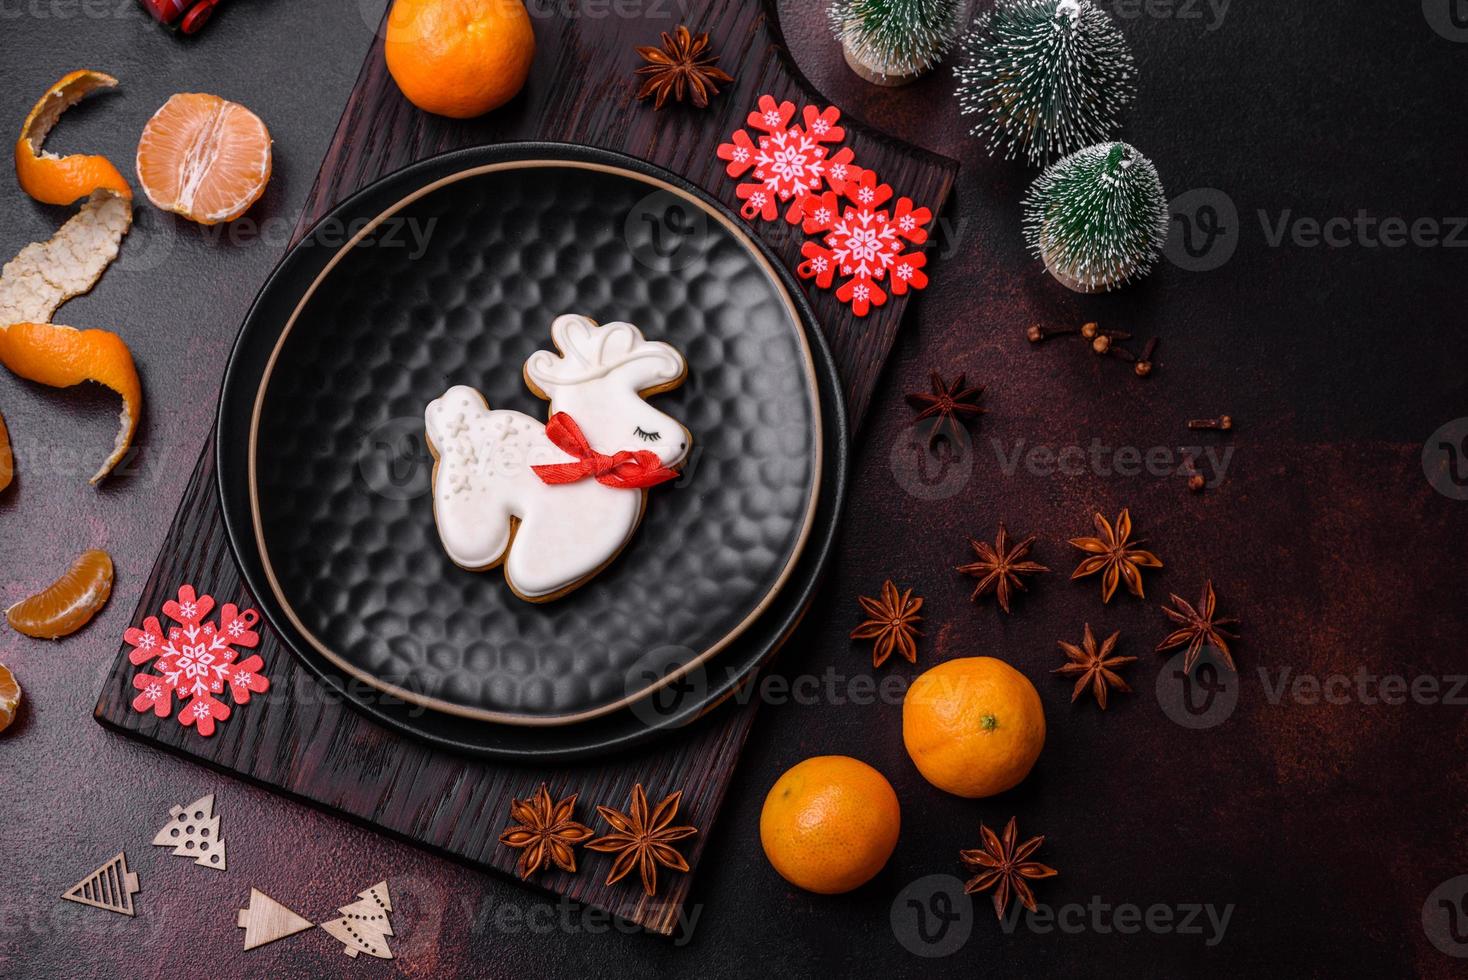 mooi Kerstmis decoraties met vakantie speelgoed, clementines en peperkoek foto